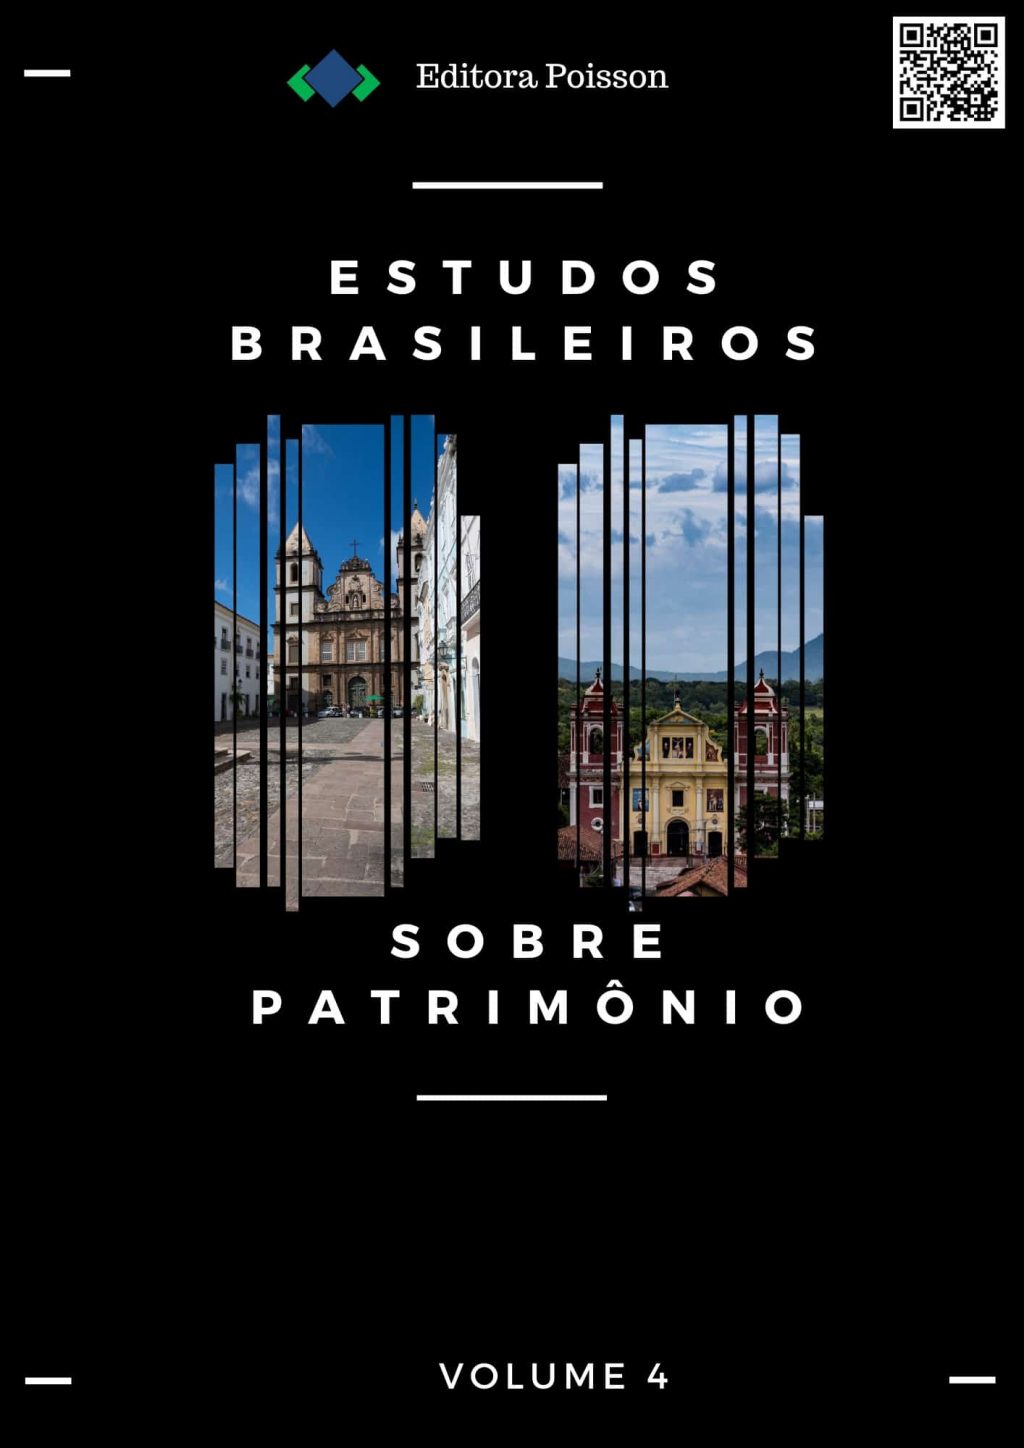 Estudos Brasileiros sobre Patrimônio – Volume 4